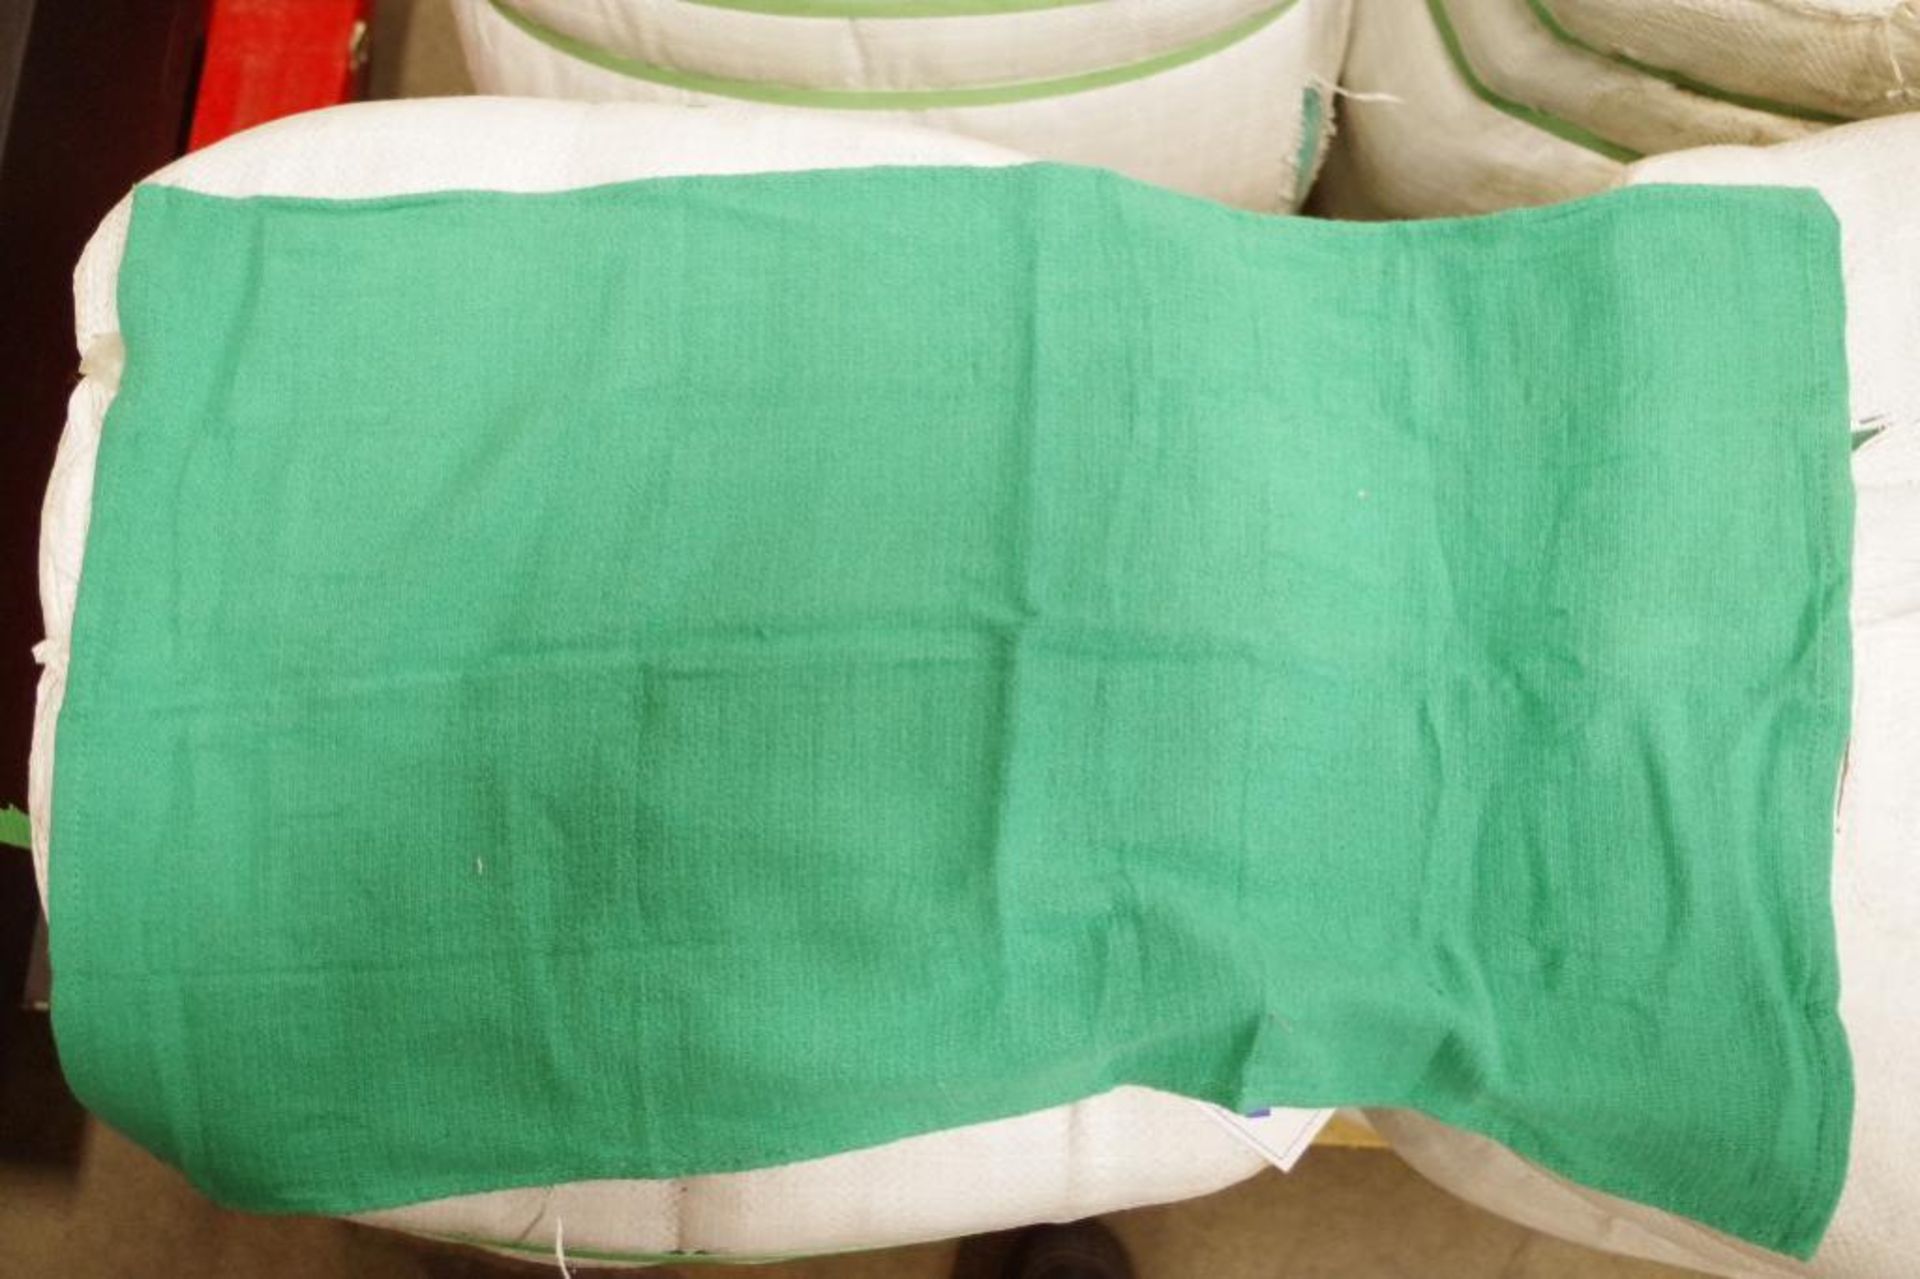 400-Piece Green Huck Towel Bale (1 Bale of 400) - Image 2 of 3